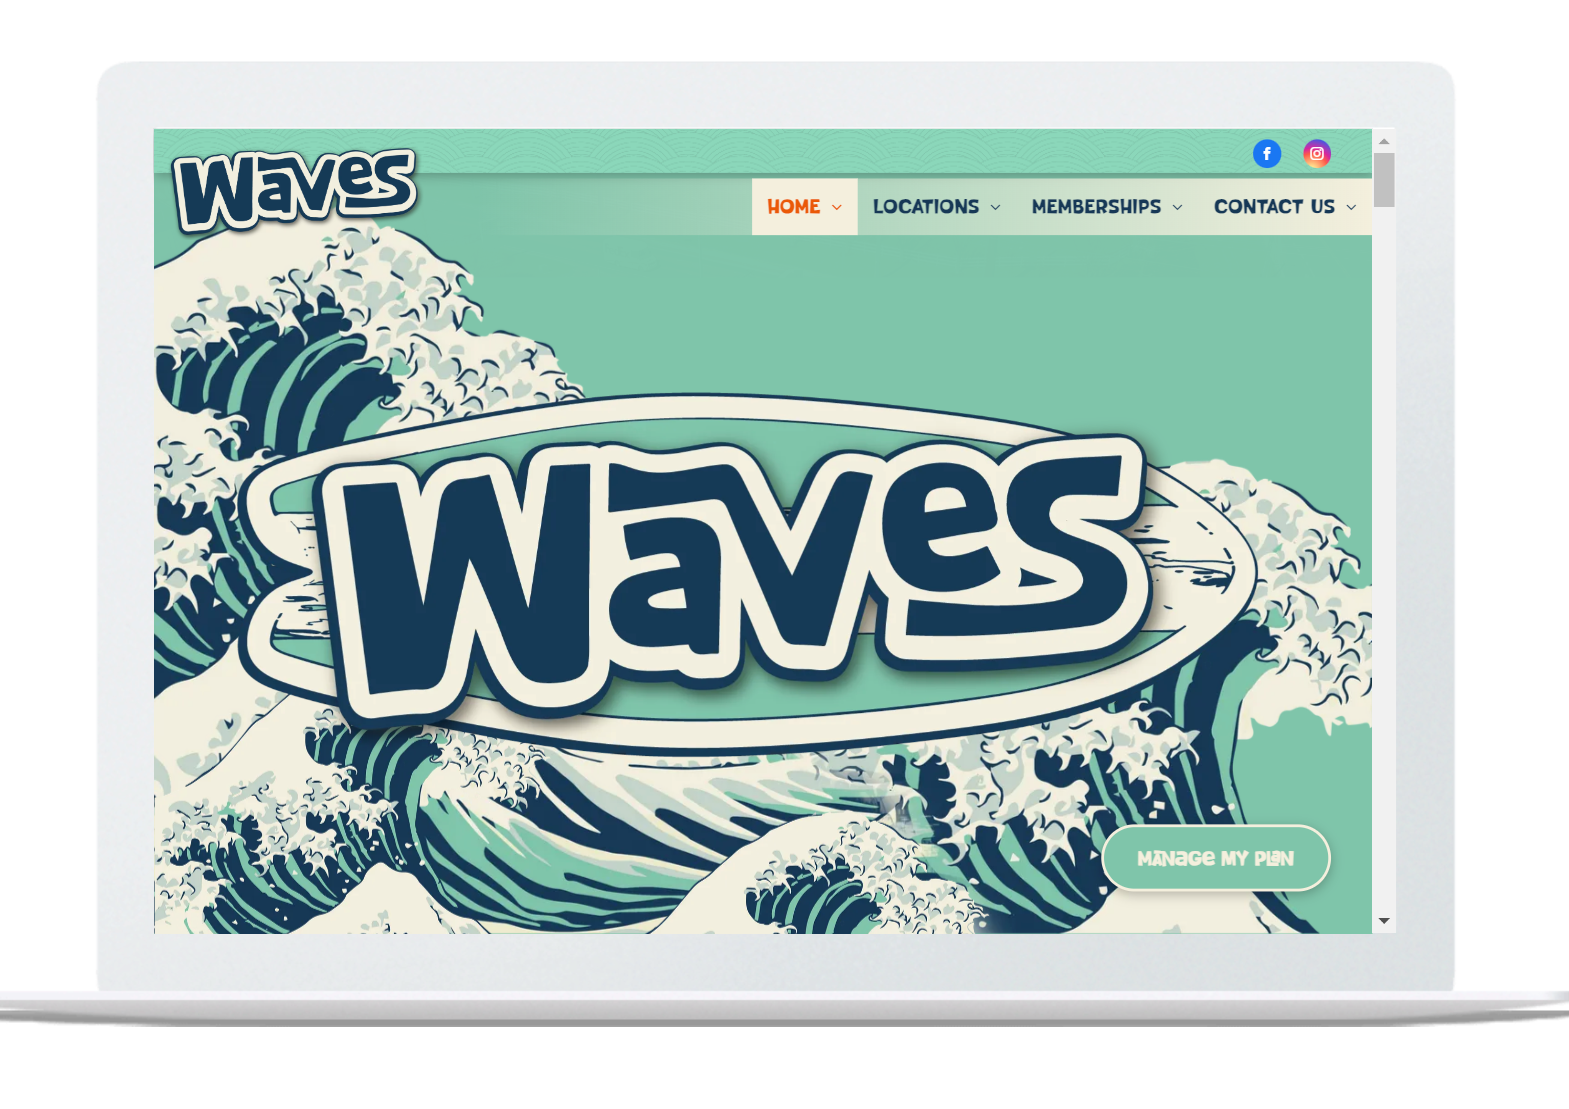 Waves Carwash in Delaware . carwash websites made by OhmCo, the best carwash websites in the wash and water treatment industry